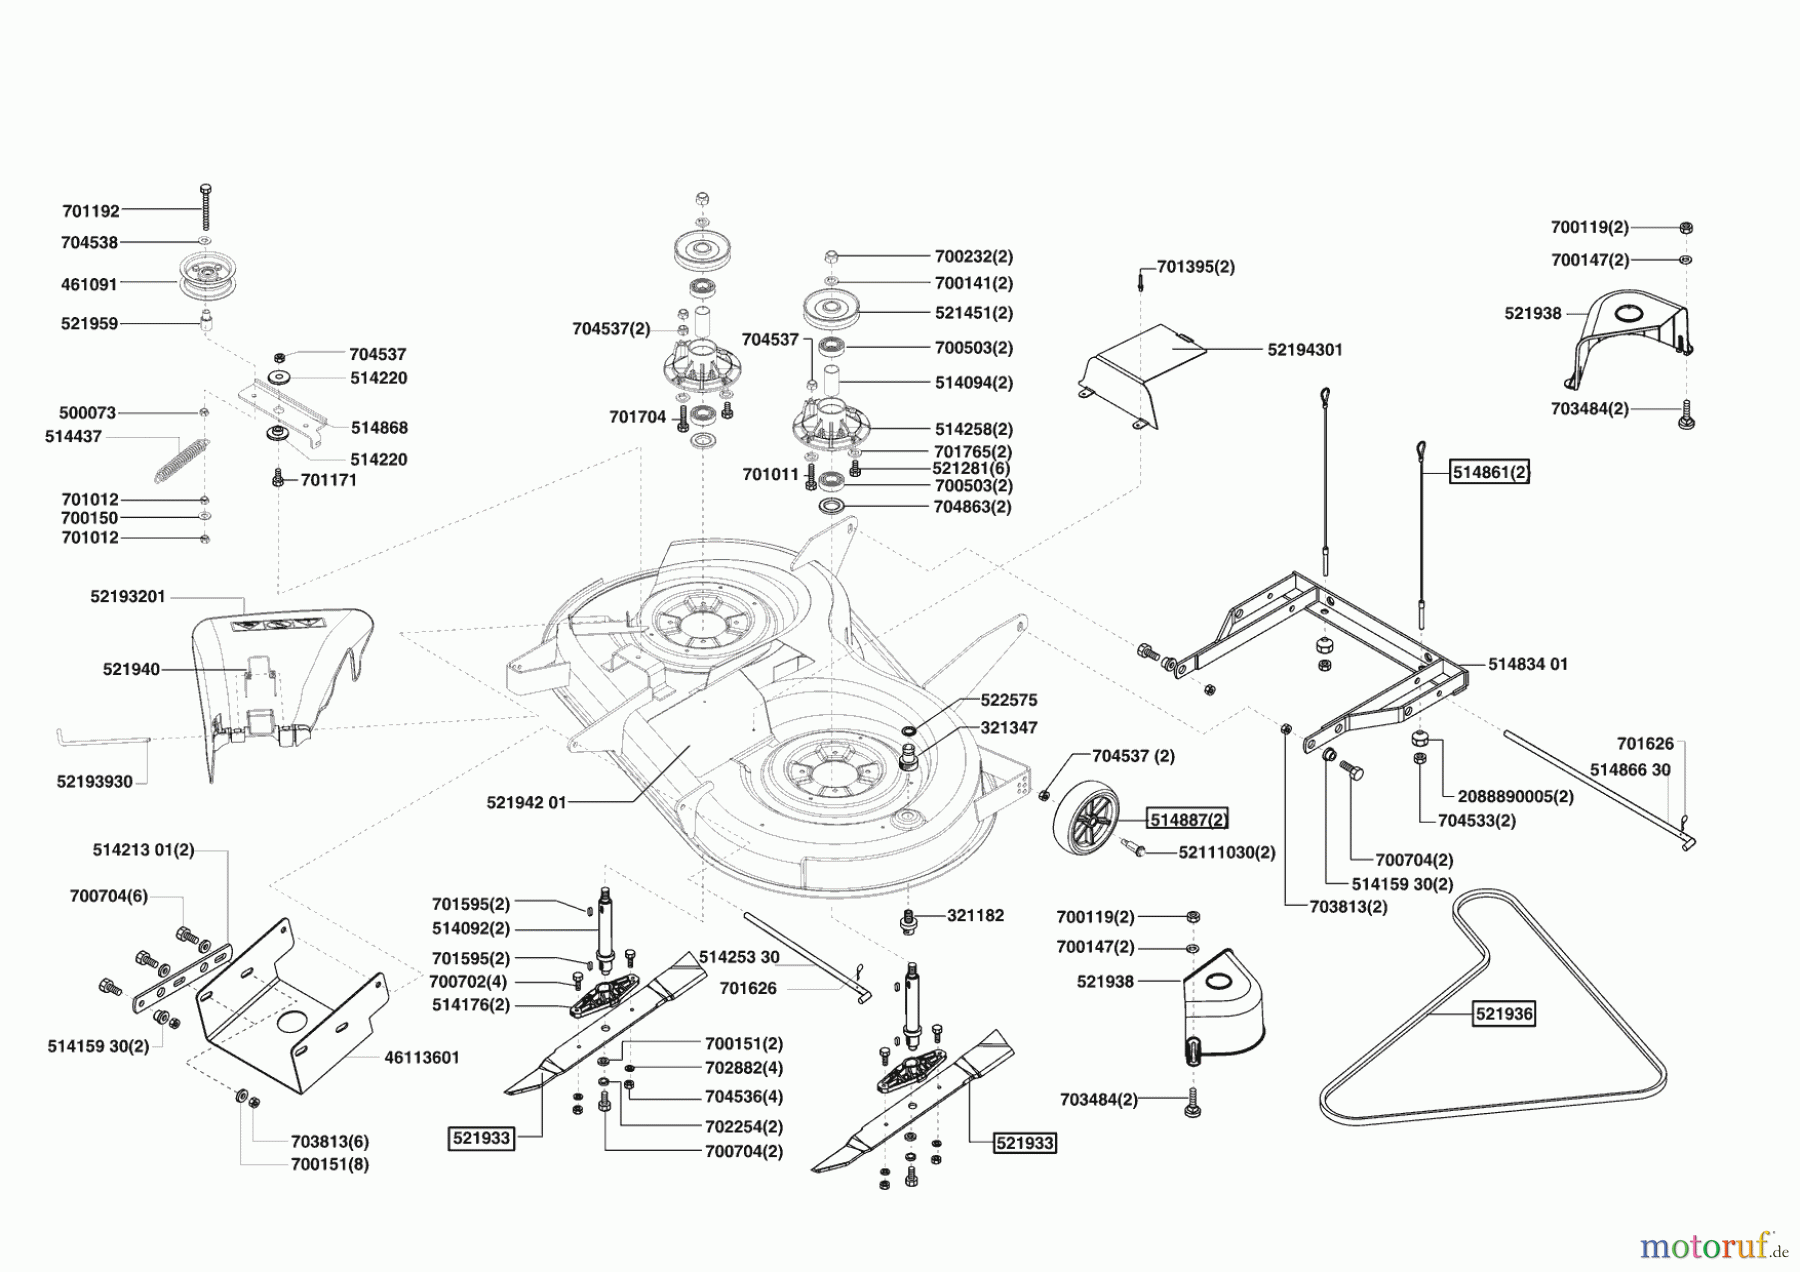  Powerline Gartentechnik Rasentraktor T 15-102 S ab 10/2003 Seite 5